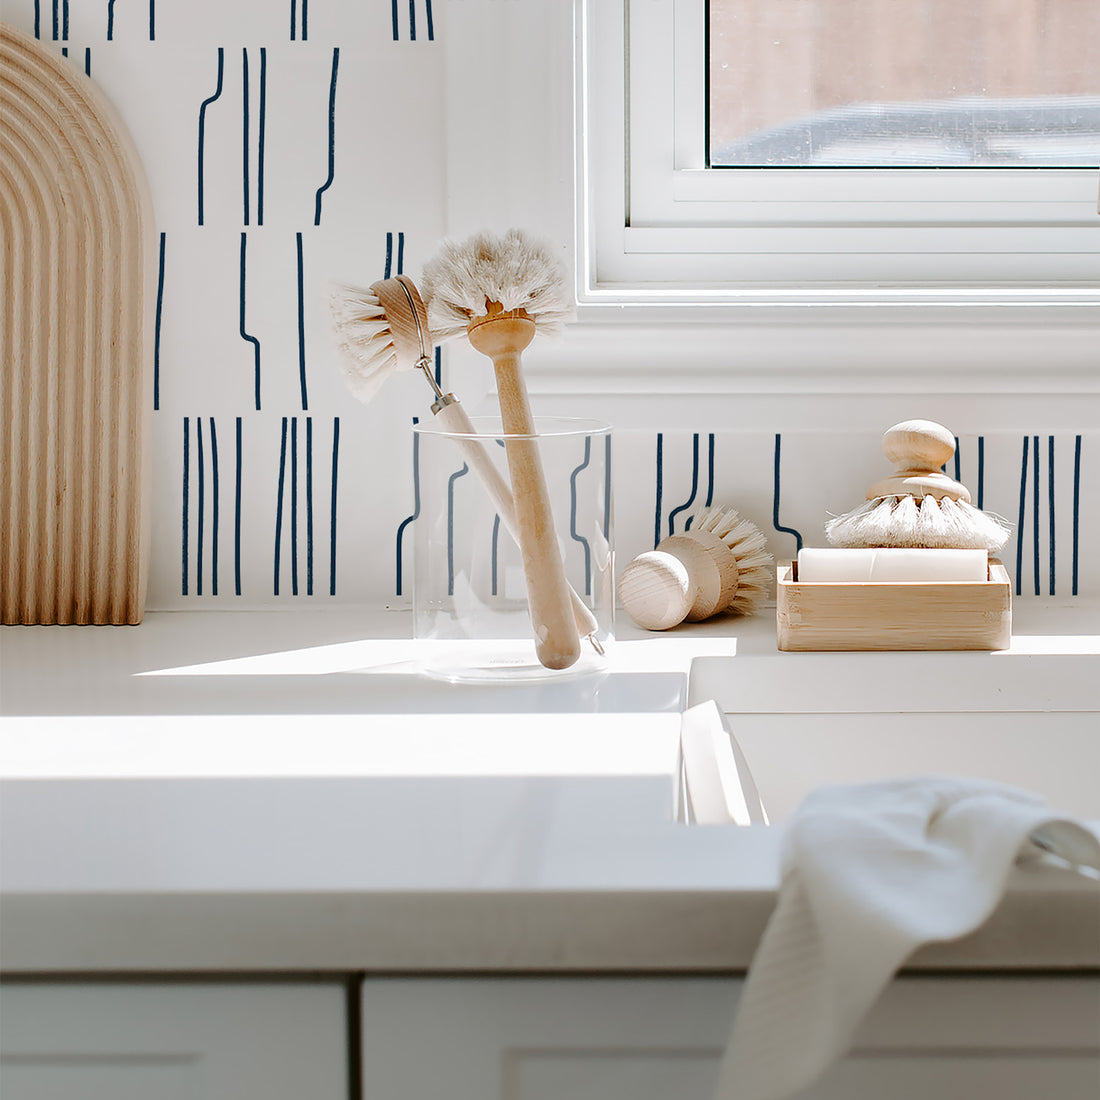 9 Inspiring Kitchen Wallpaper Ideas | The Family Handyman